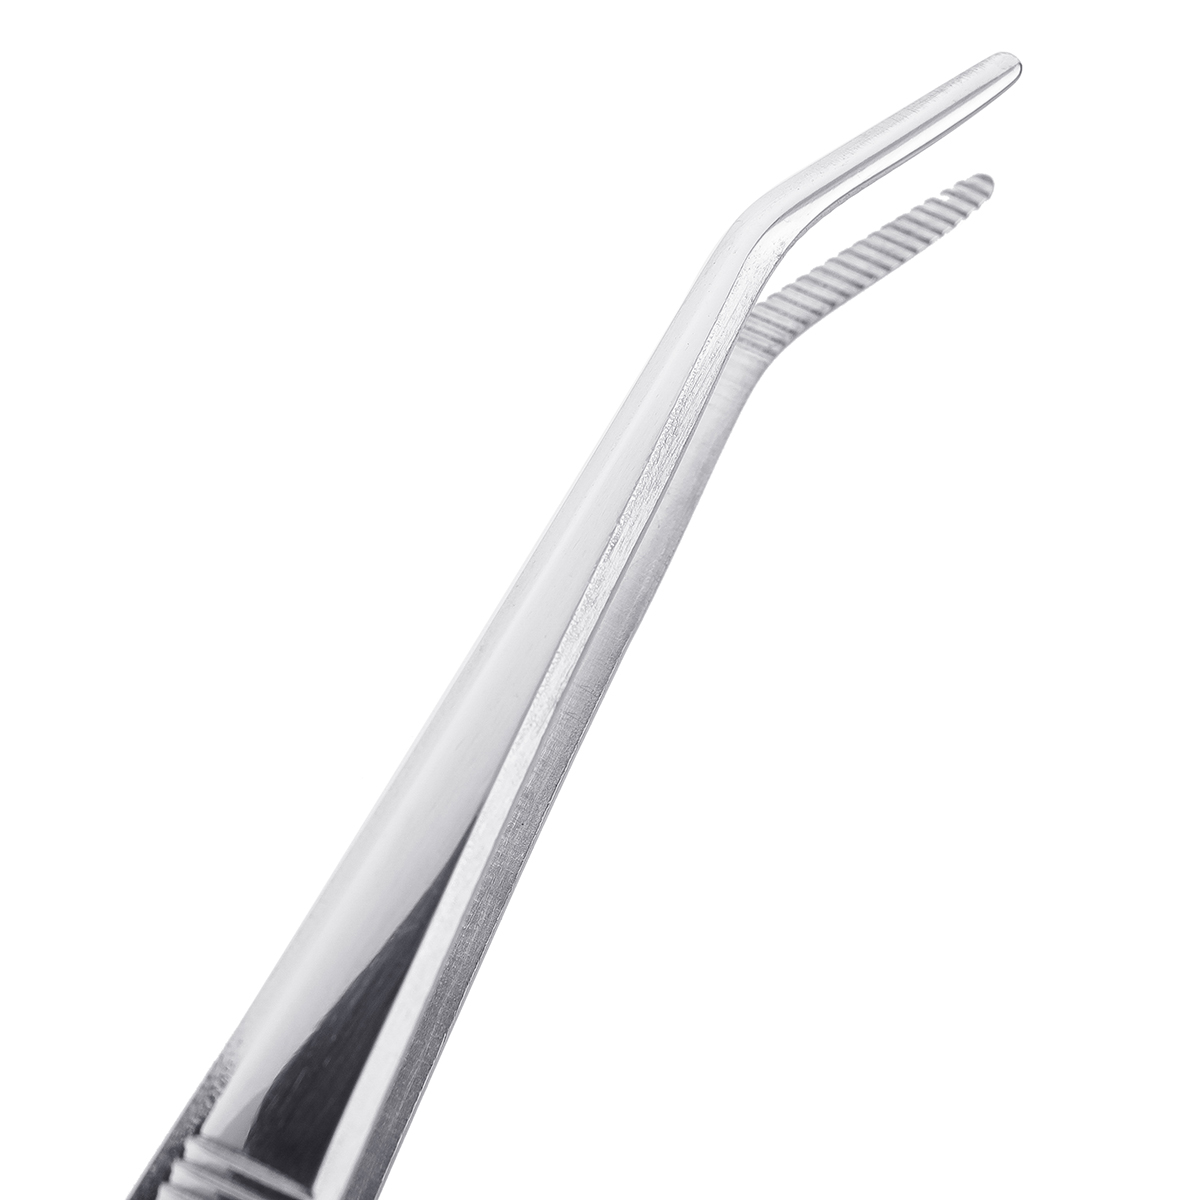 5pcs-Stainless-Oral-Care-Dental-Tools-Kit-Dentist-Teeth-Clean-Hygiene-Picks-Mirror-Tool-1320430-7